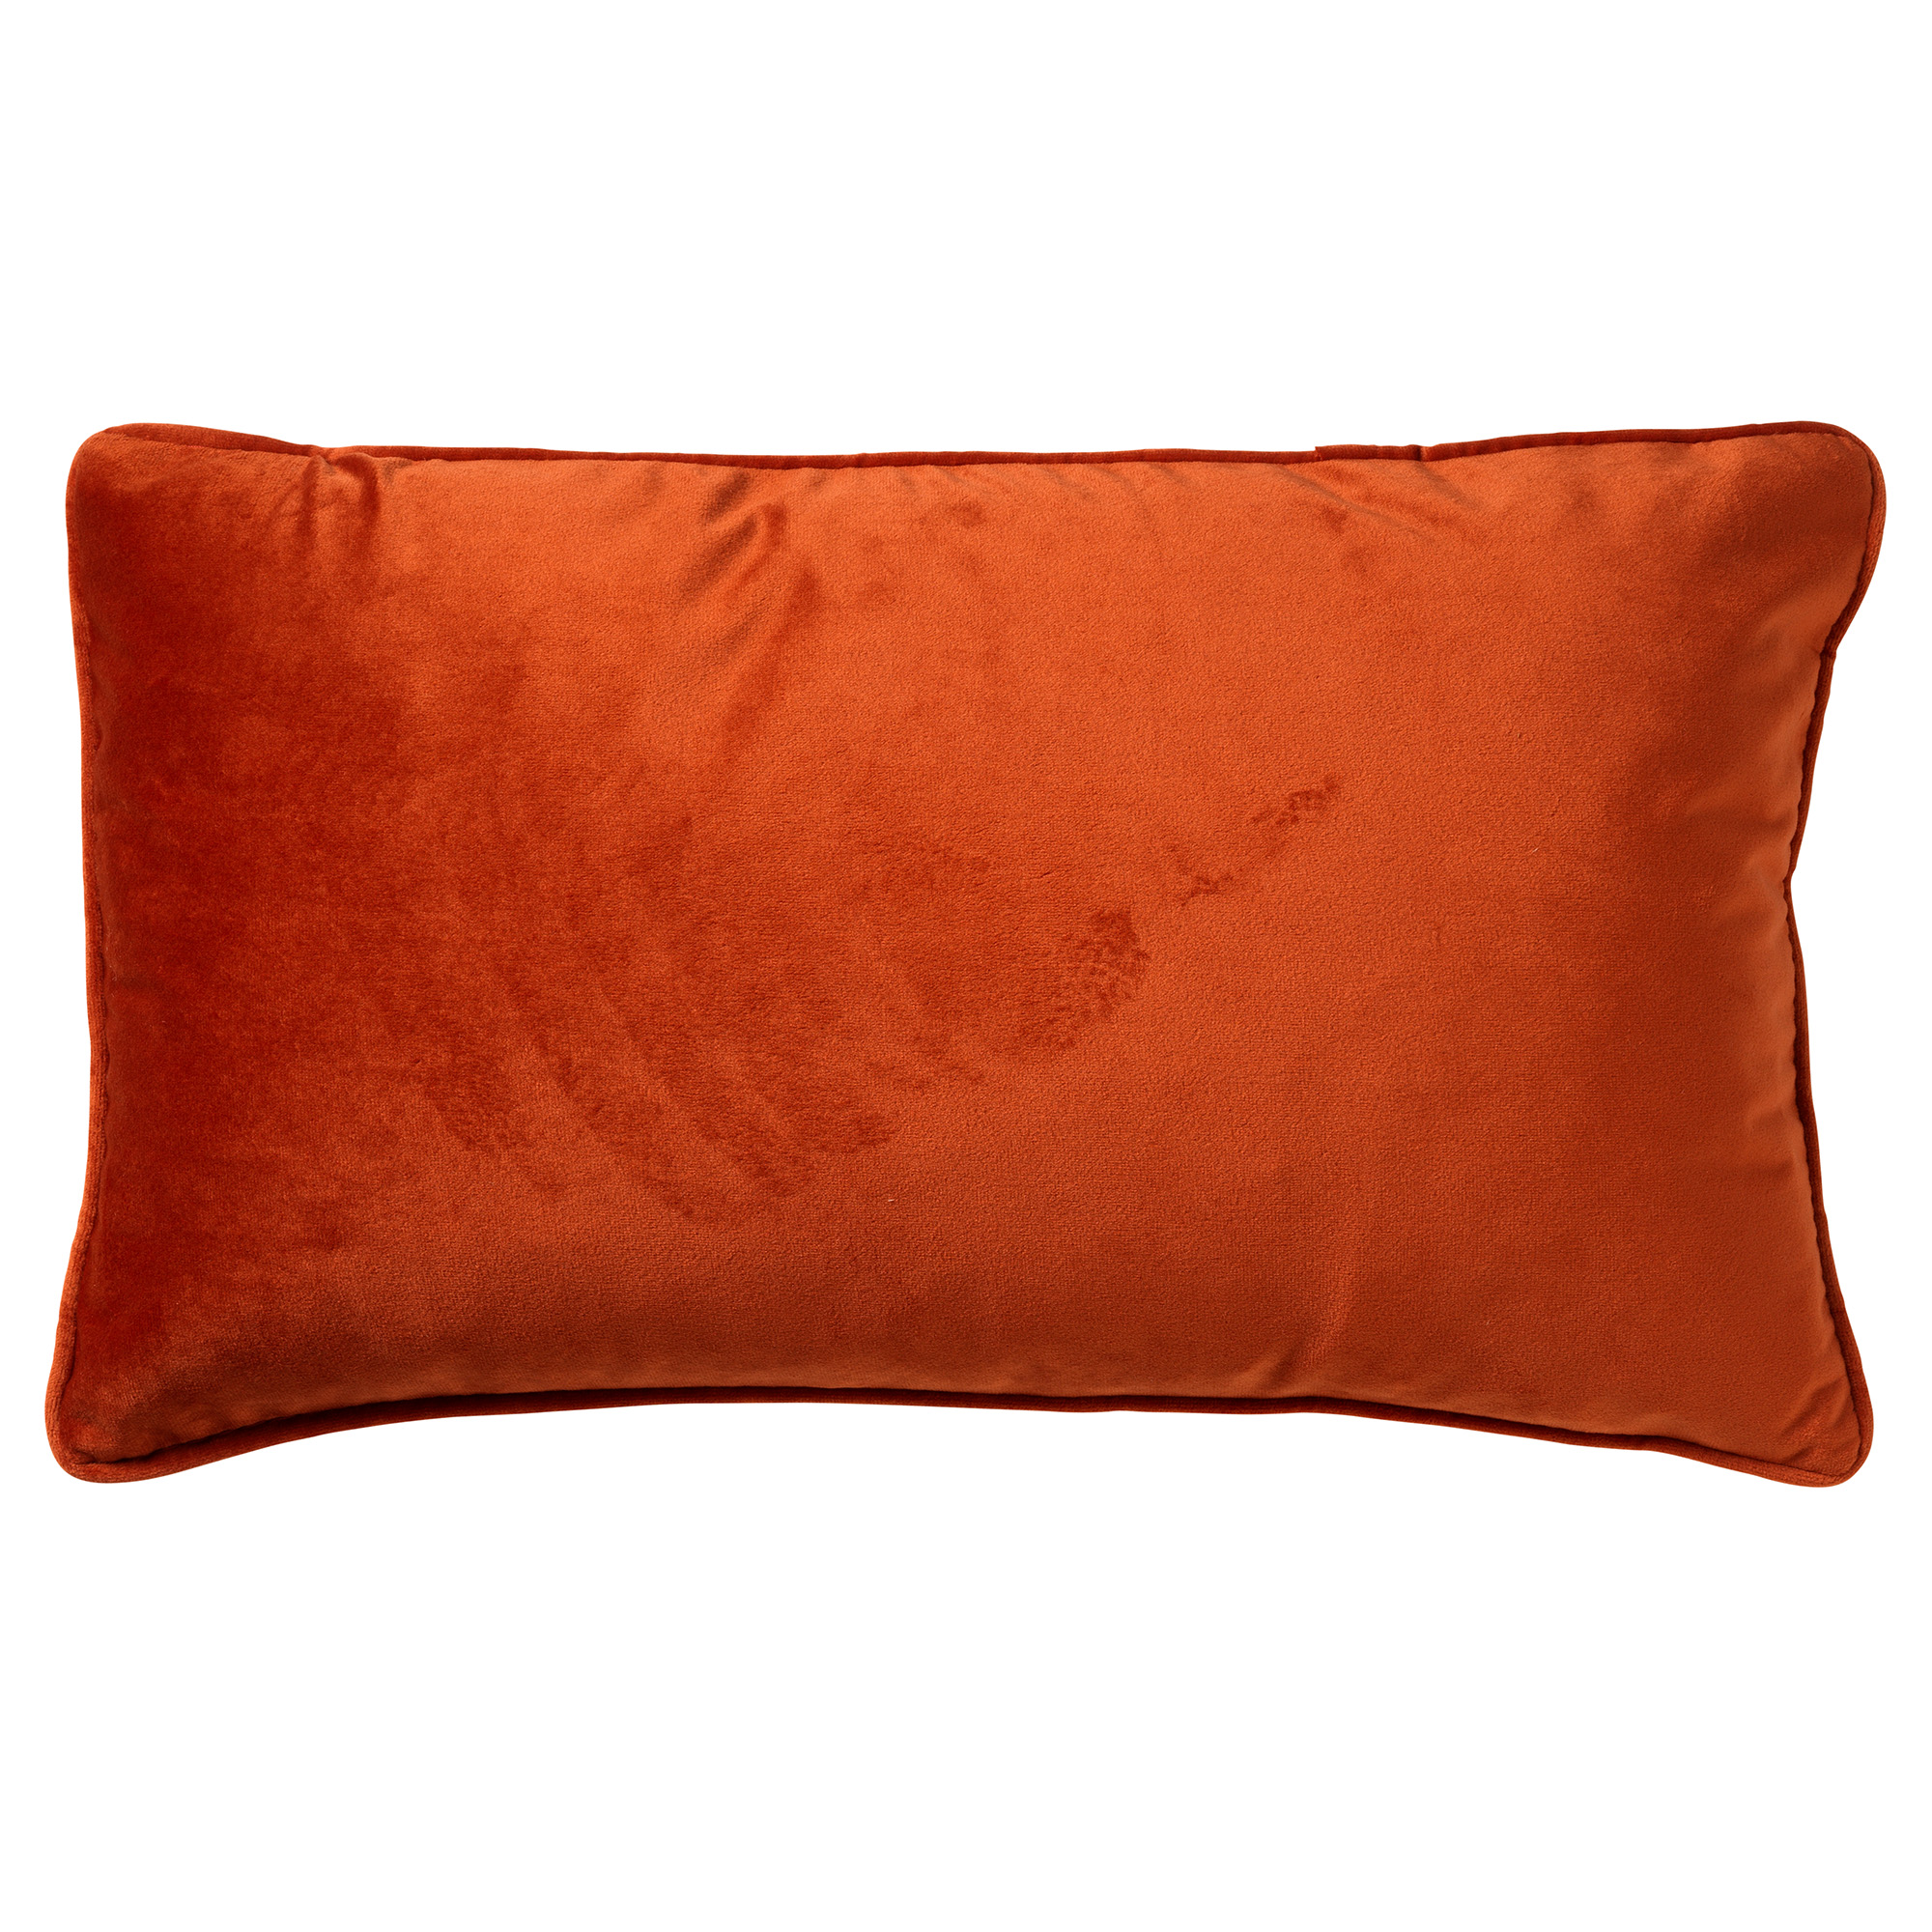 FINN - Cushion 30x50 cm Potters Clay - orange-terracotta